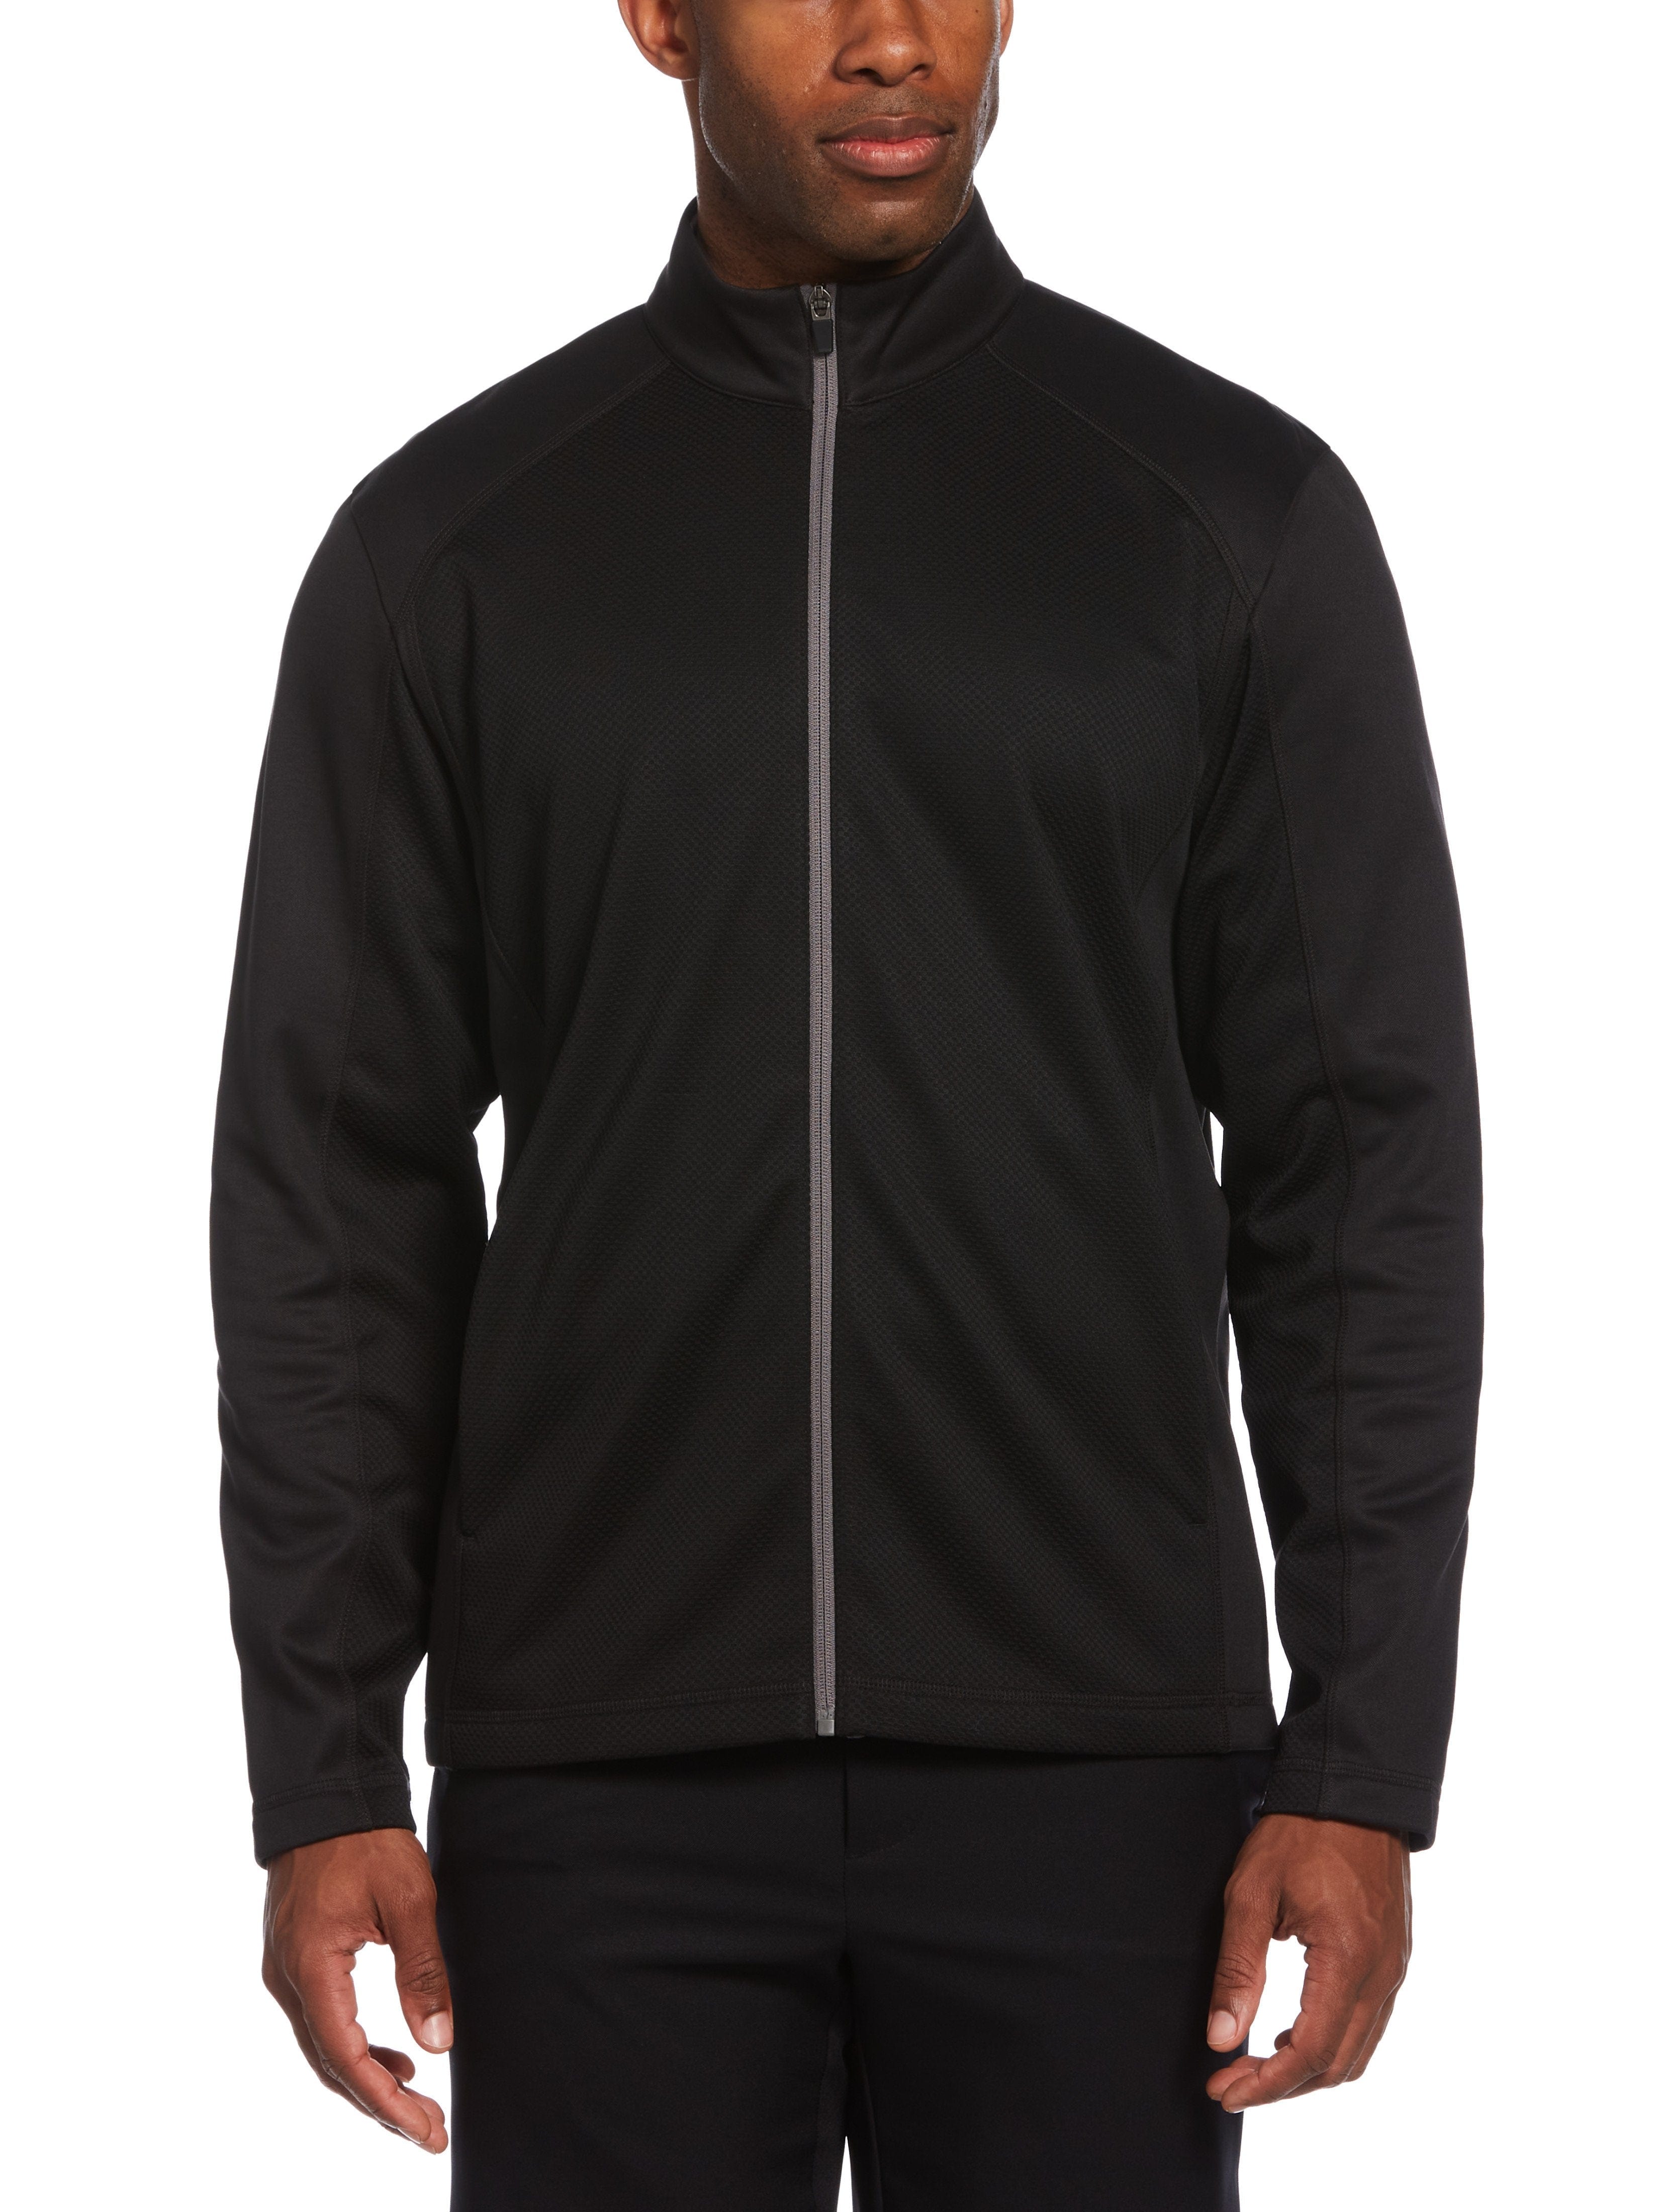 PGA TOUR Apparel Mens Mixed Texture Fleece Golf Jacket Top, Size XL, Black, 100% Polyester | Golf Apparel Shop